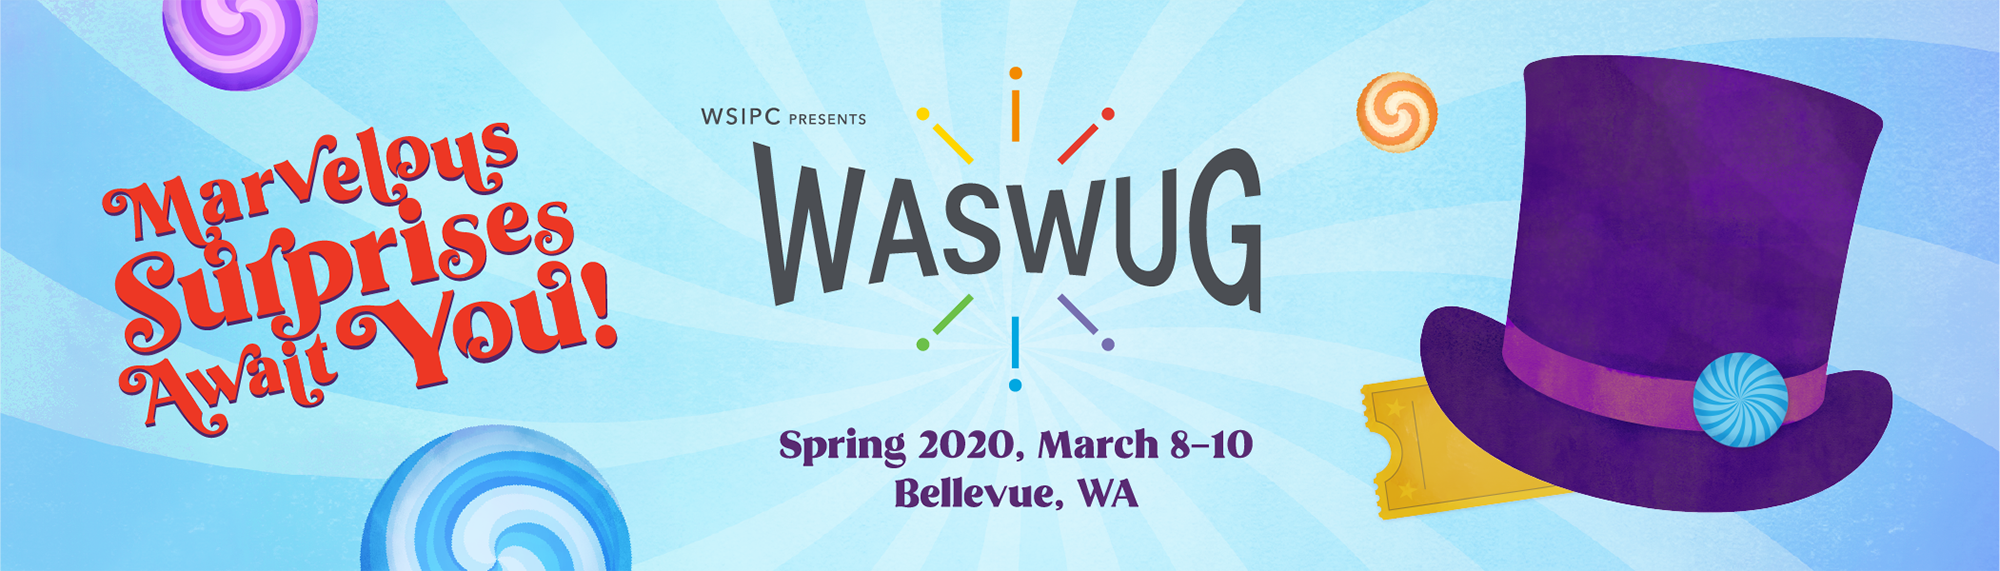 WASWUG 2020 Flyer